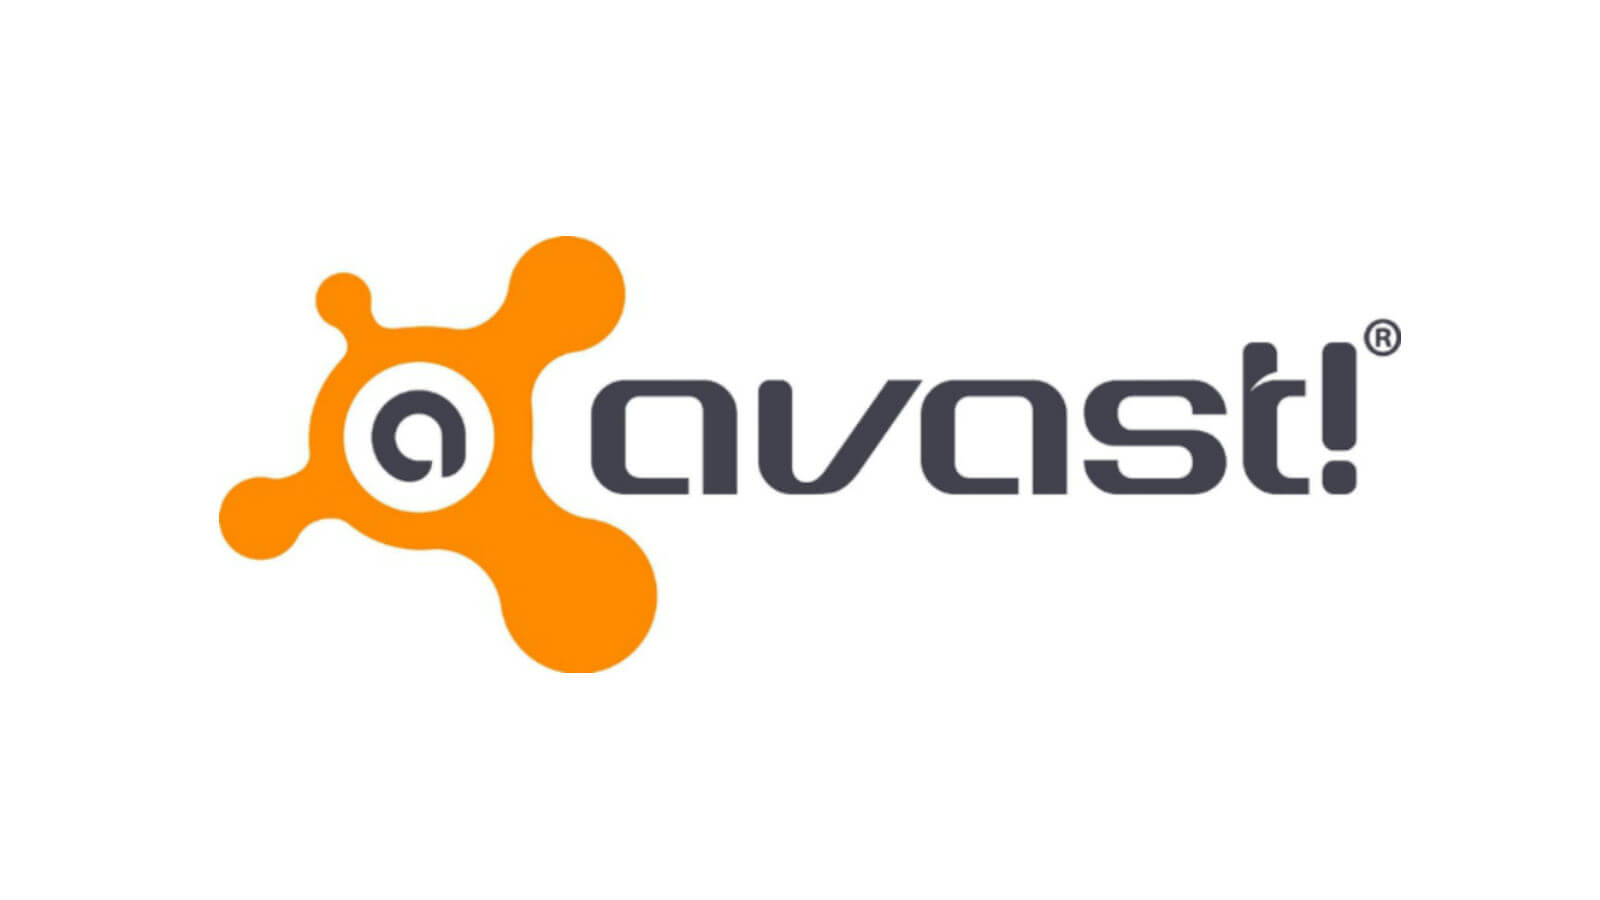 Logo Avast